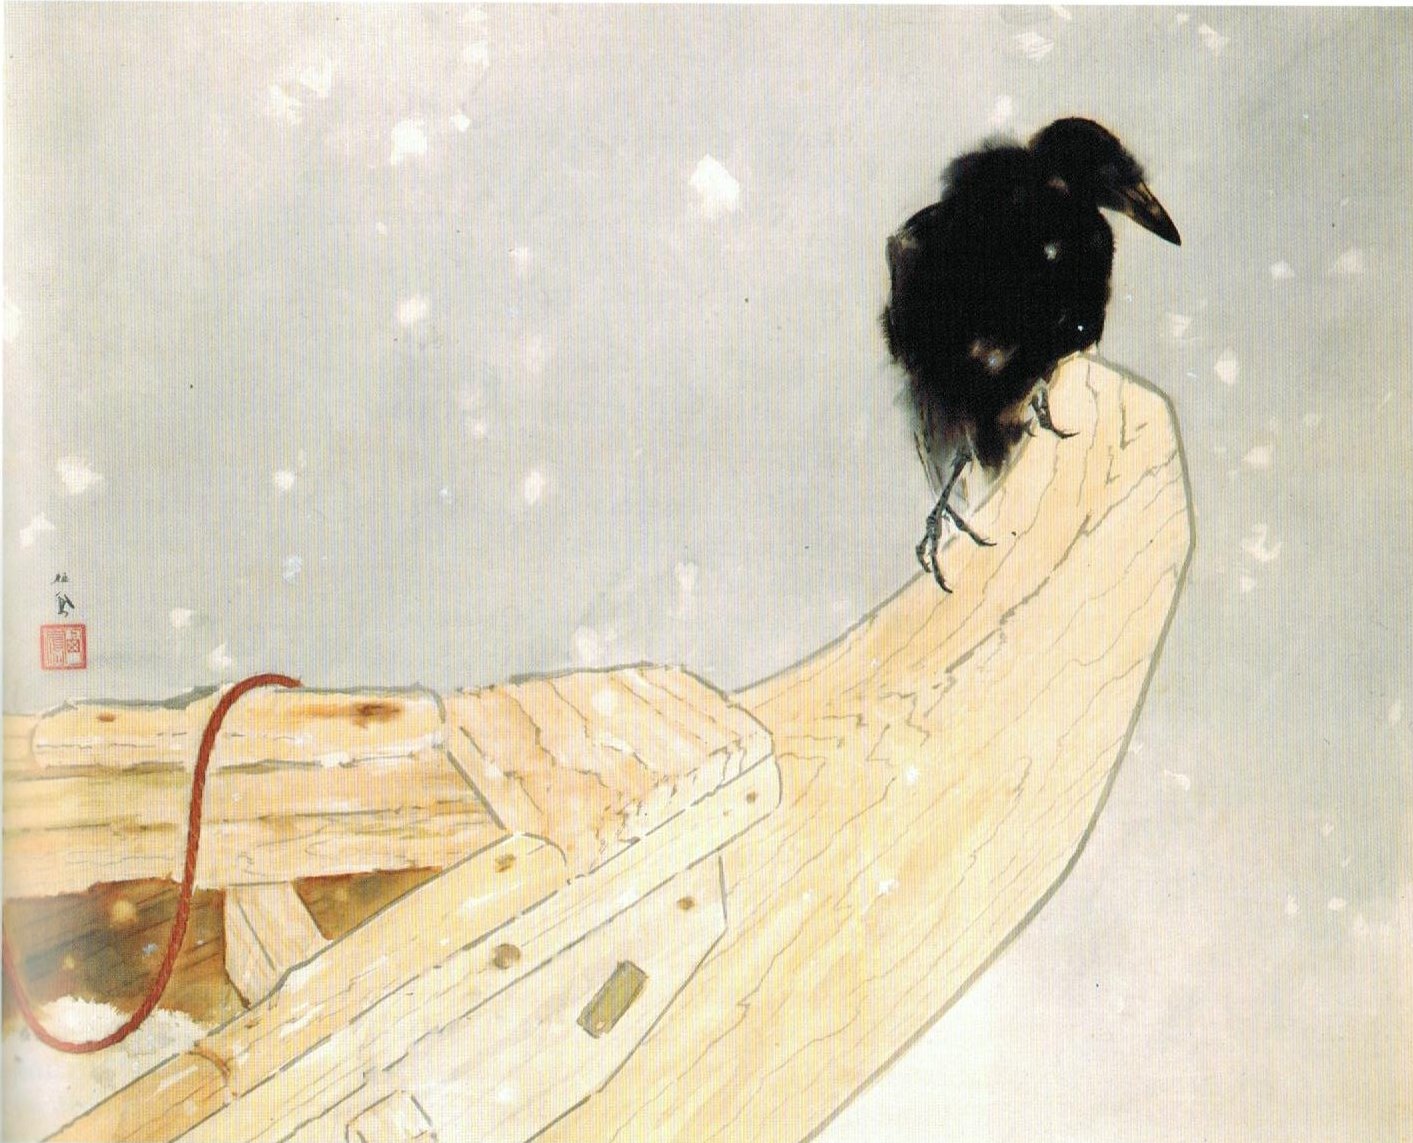 Spring Snow (Shunsetsu) by Takeuchi Seihō - 1942 - 74.3 x 90.9 cm National Museum of Modern Art